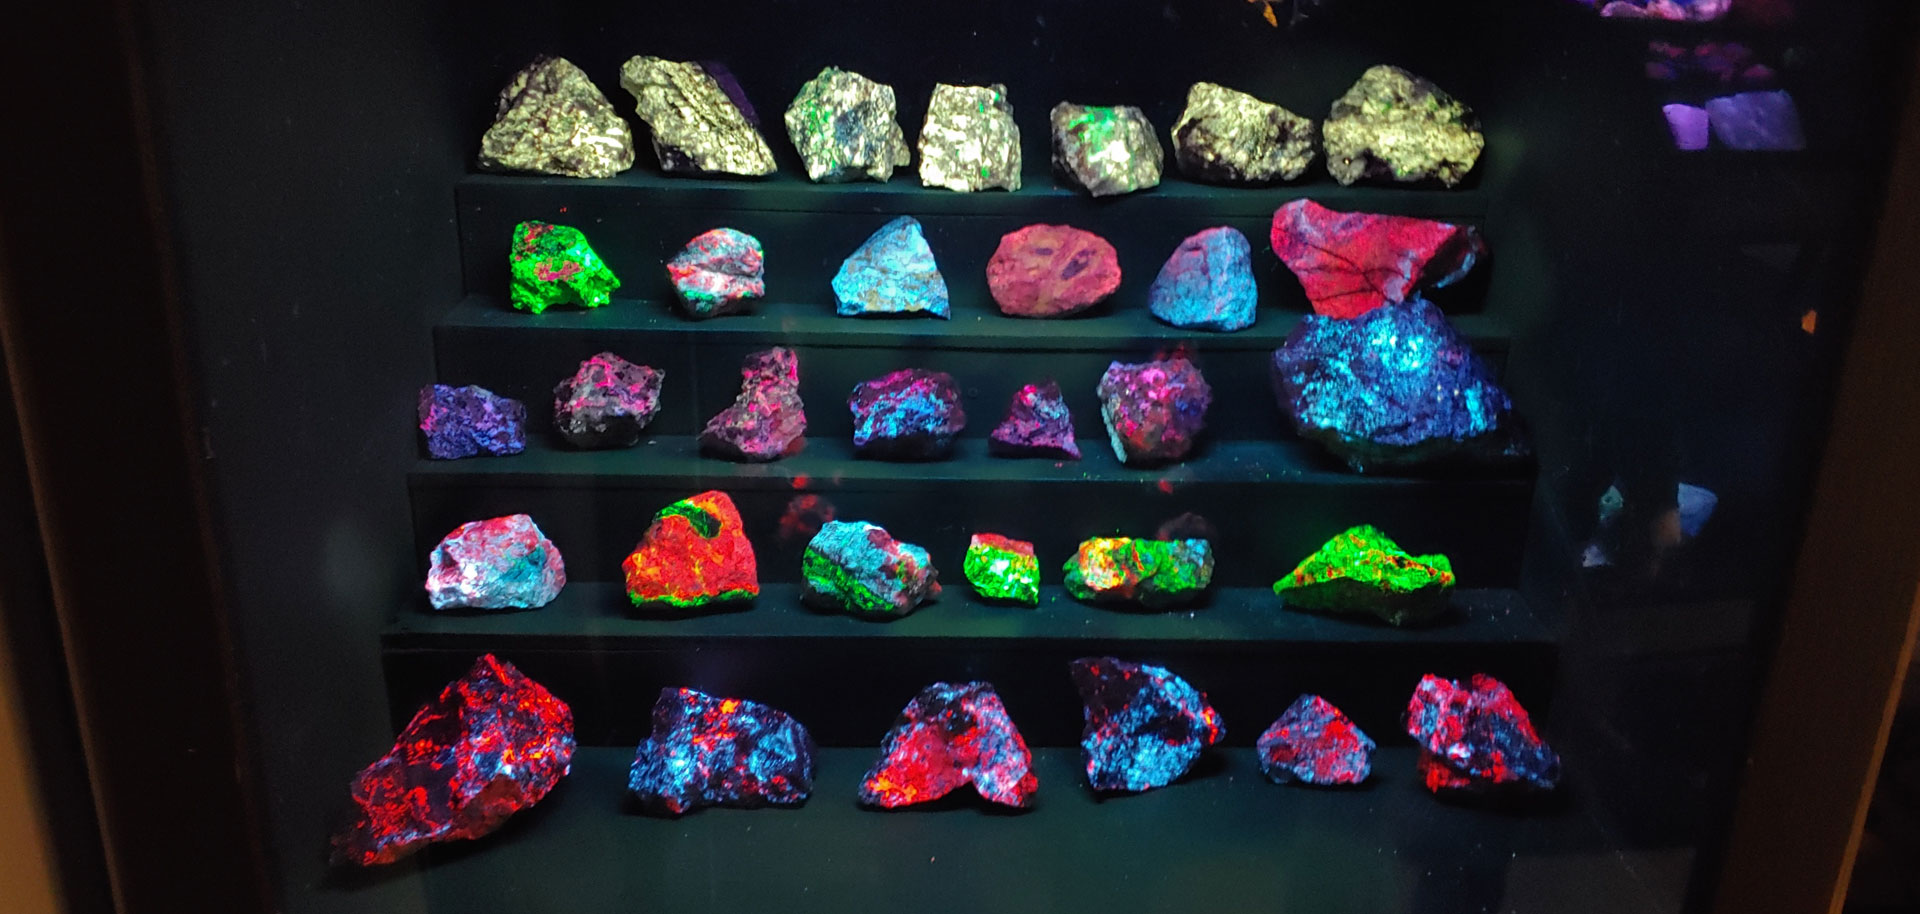 Shortwave & Longwave UV Light for Minerals & Rocks